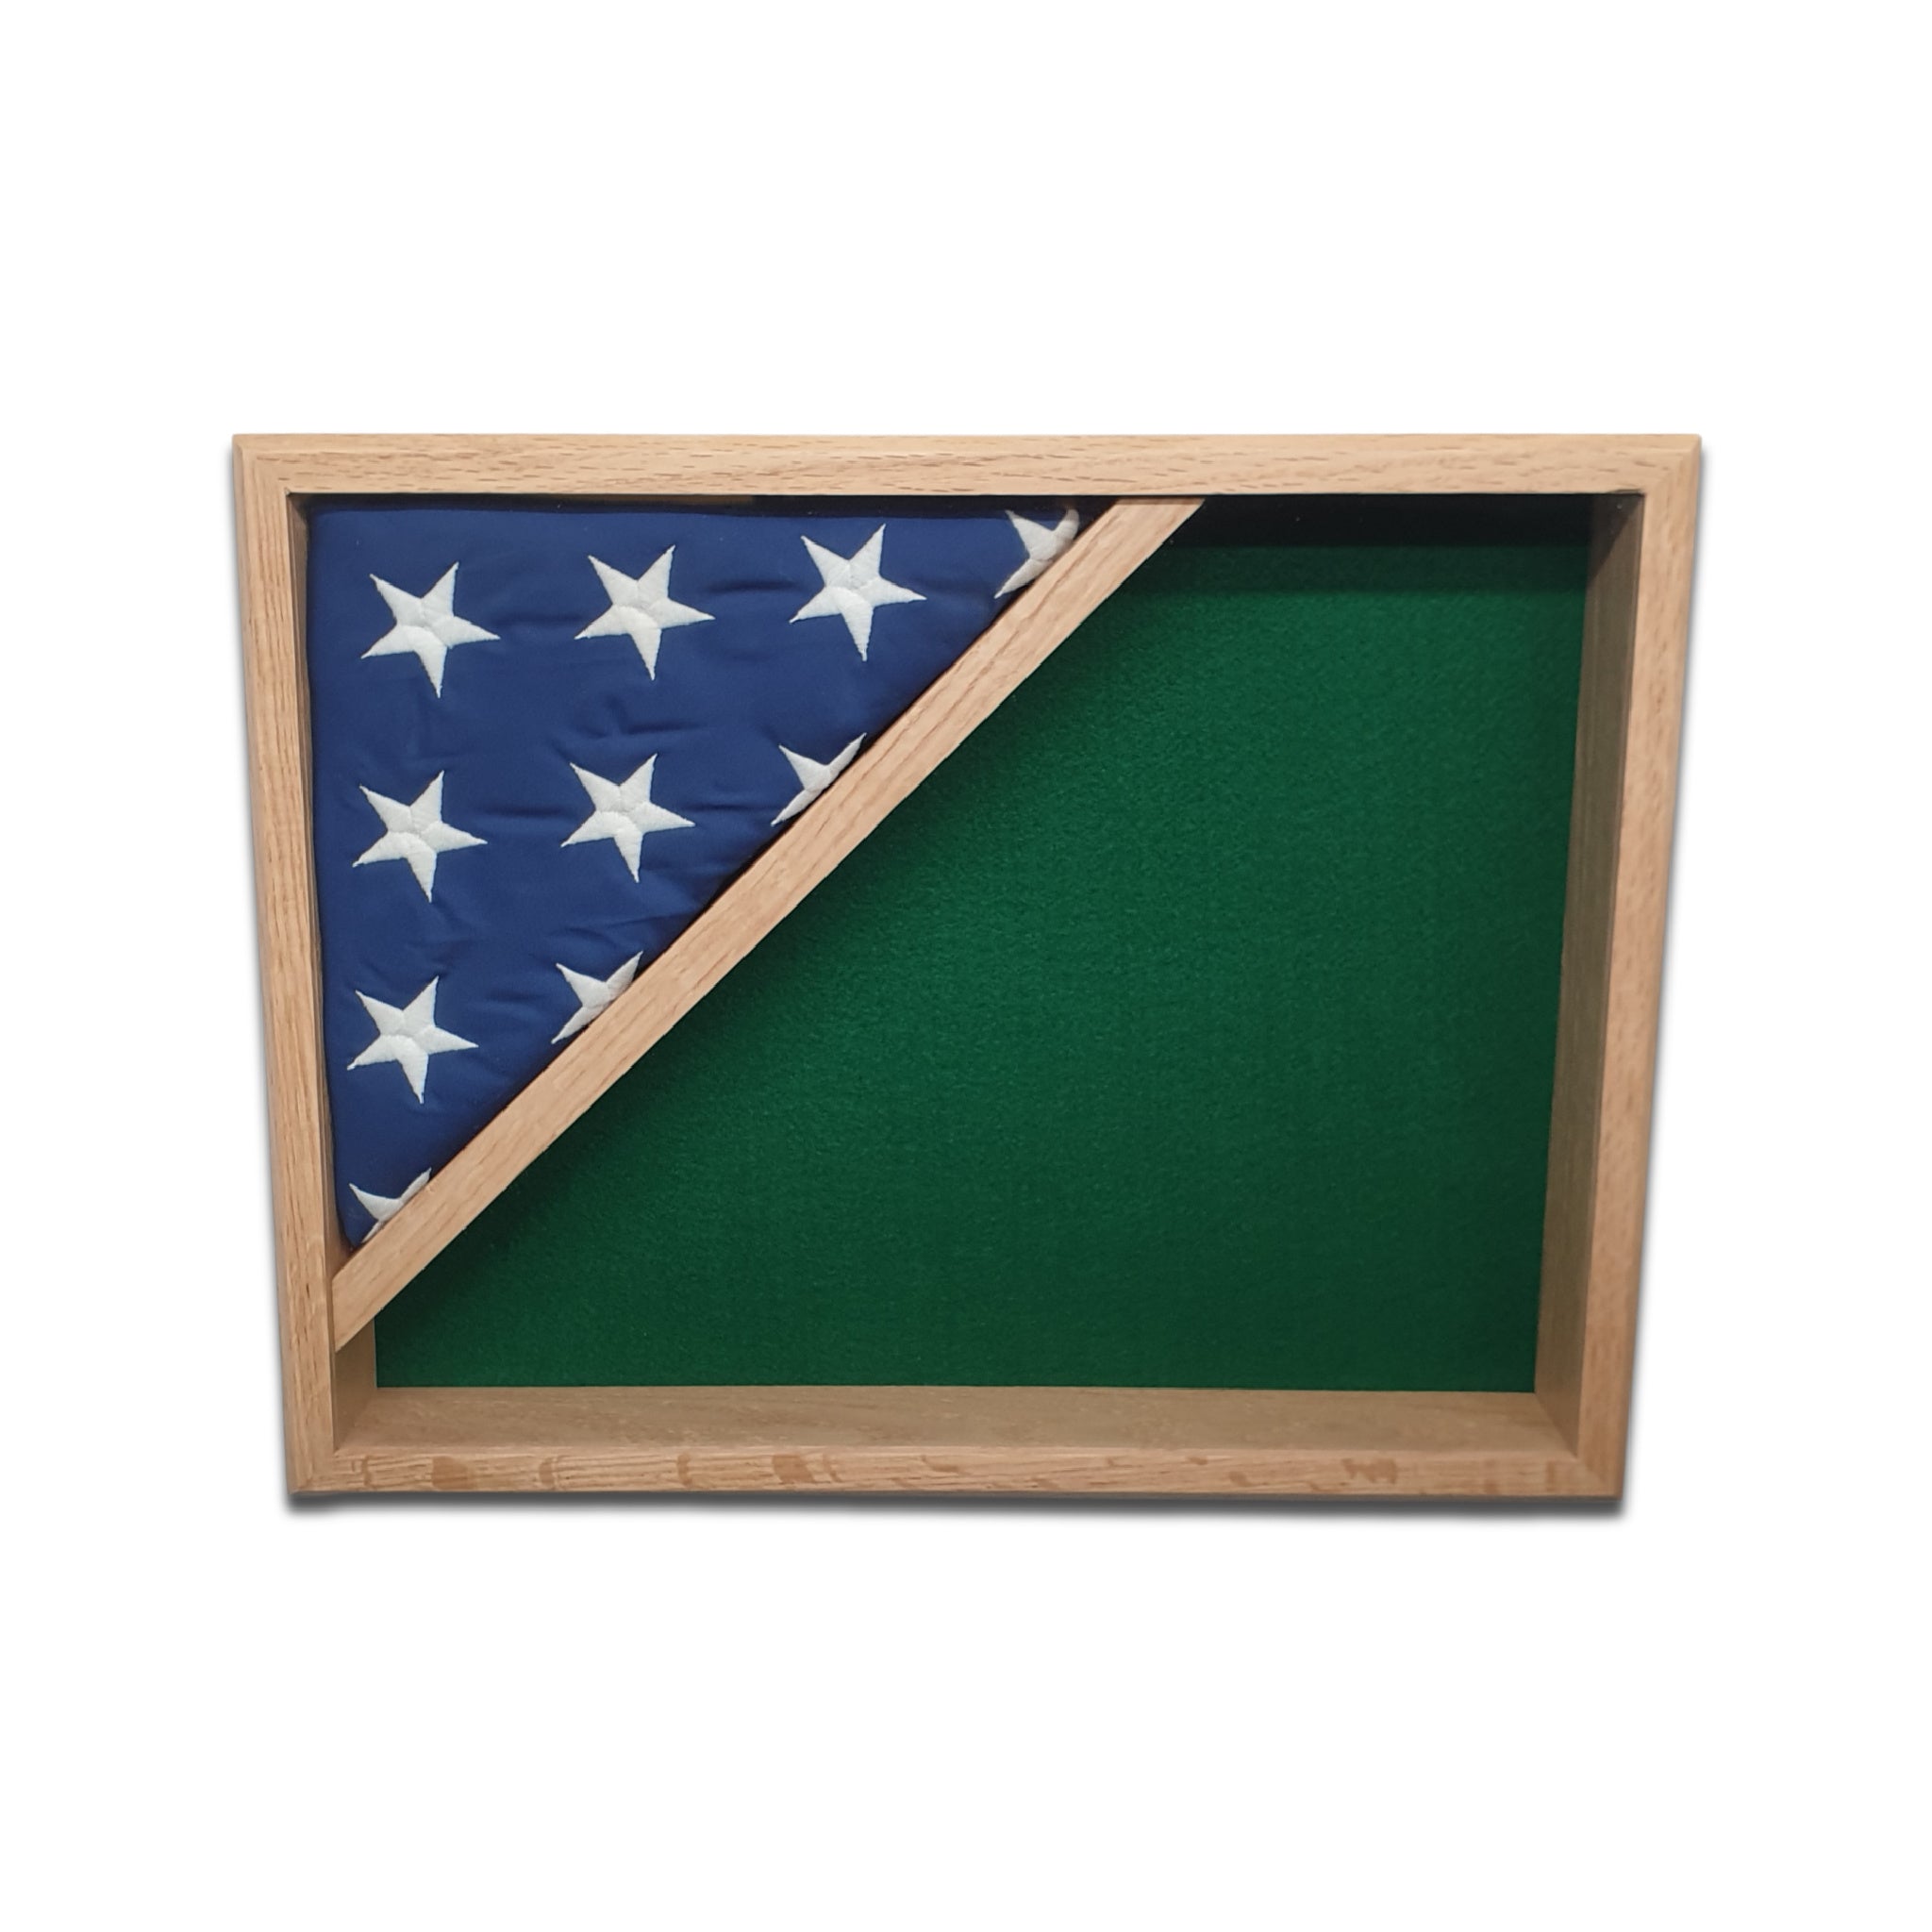 Oak hardwood 14"x18" Shadow box with green felt backer, and 3'x5' folded flag.